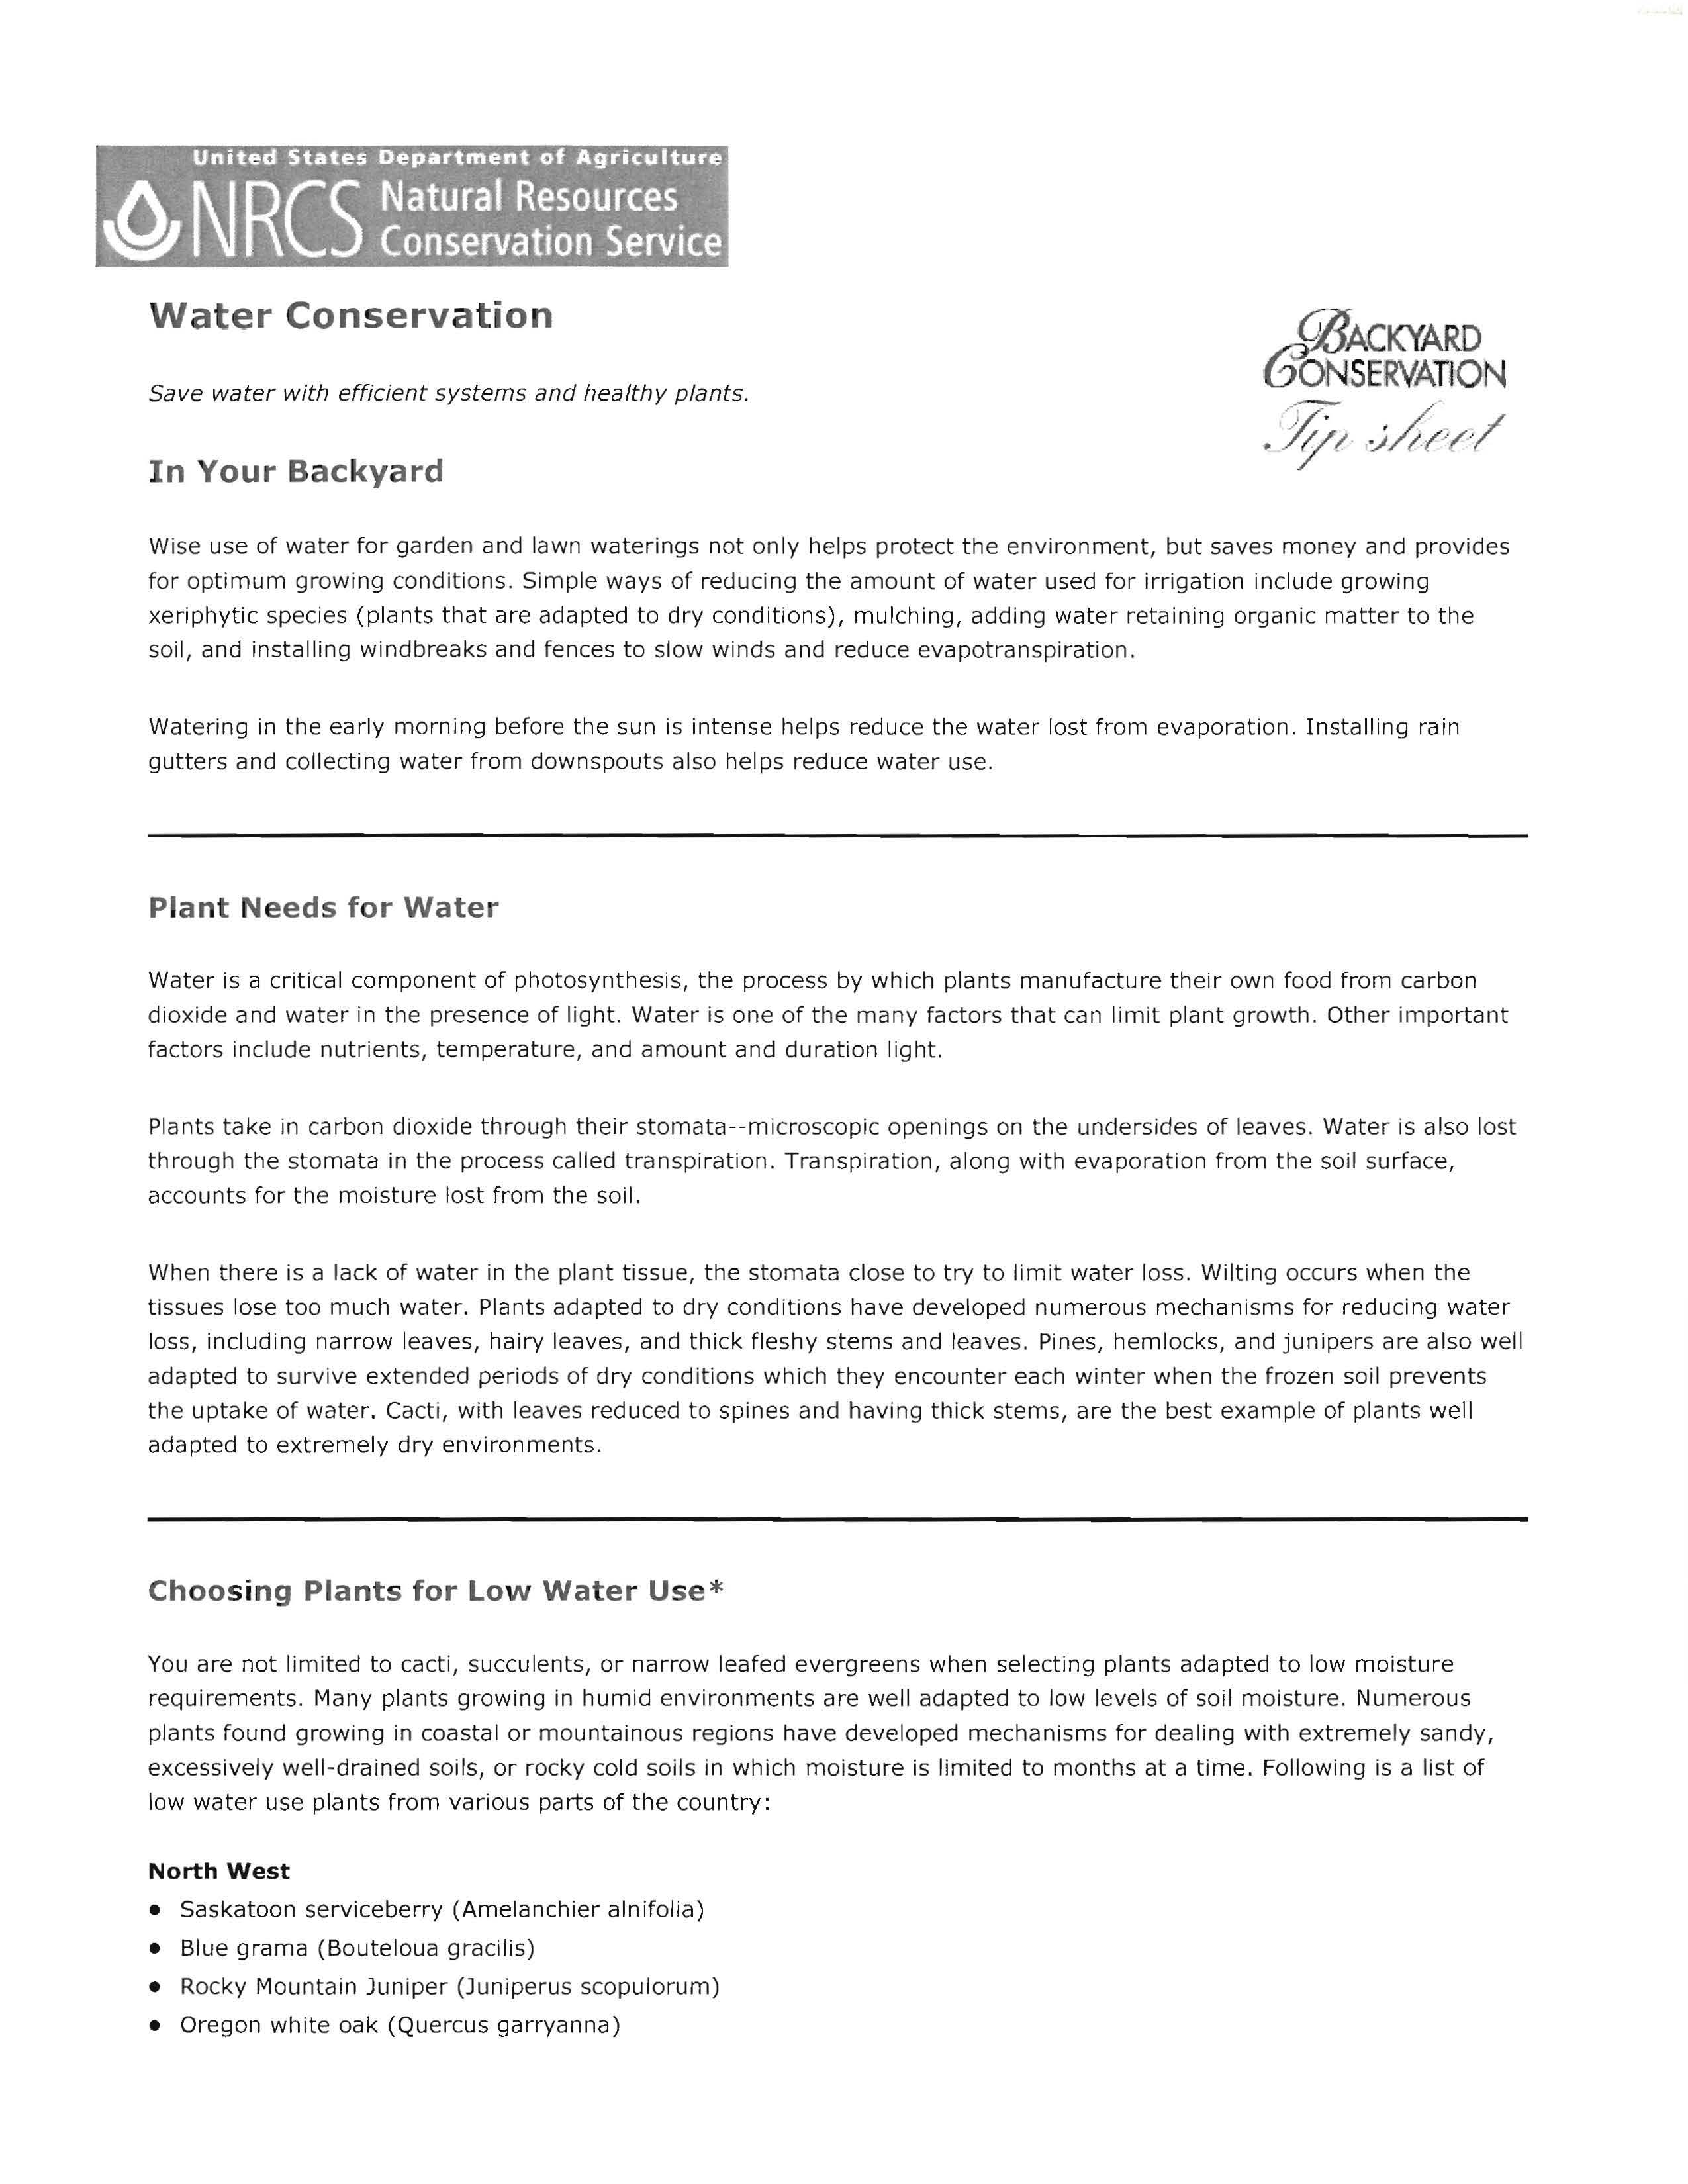 Backyard Conservation Water Conservation tip sheet